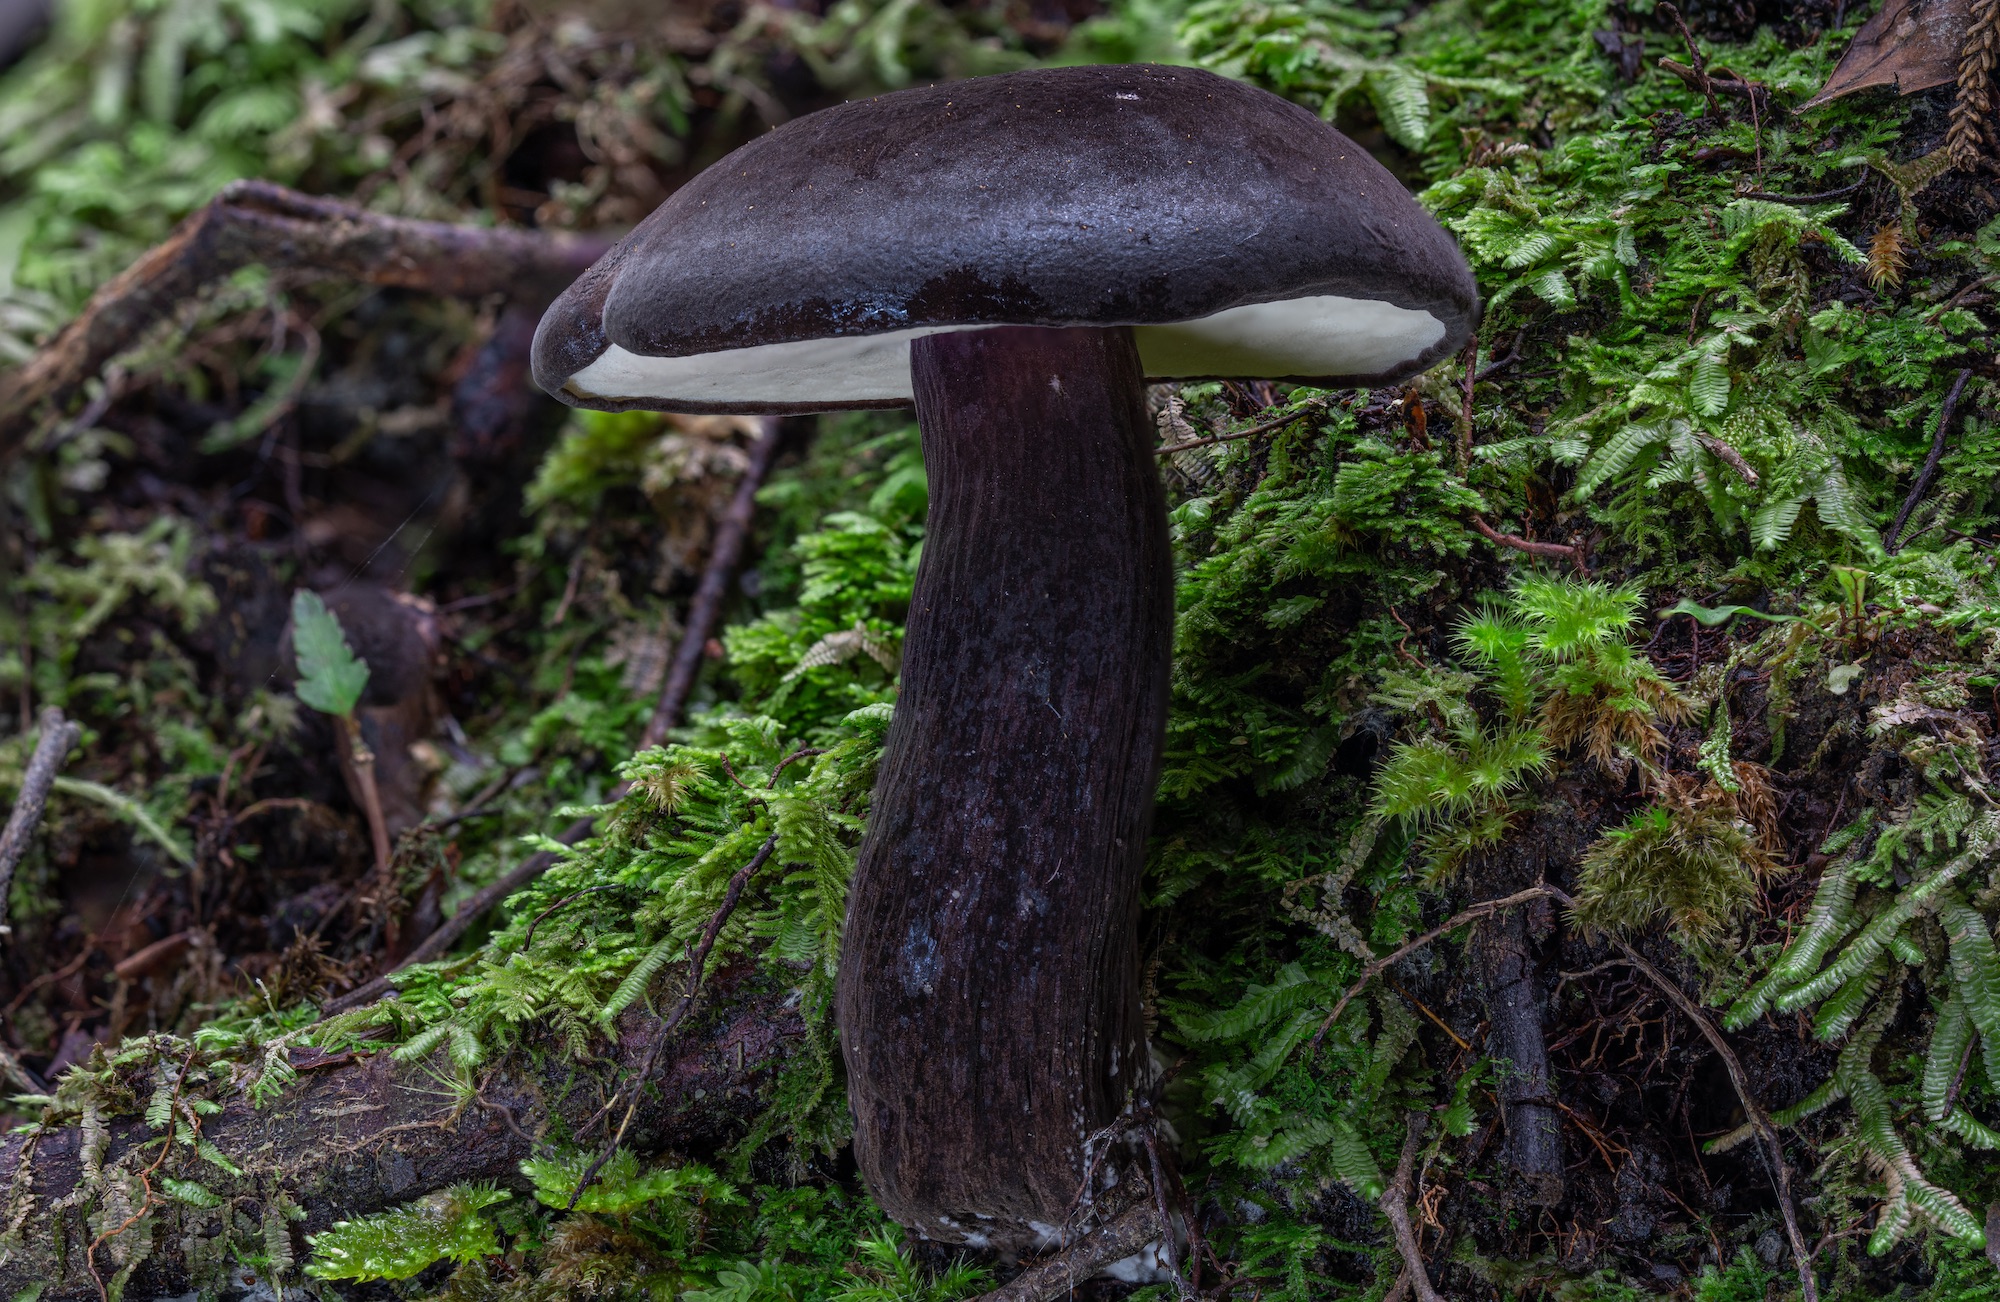 Tyopilus formosus | Fungi of NZ